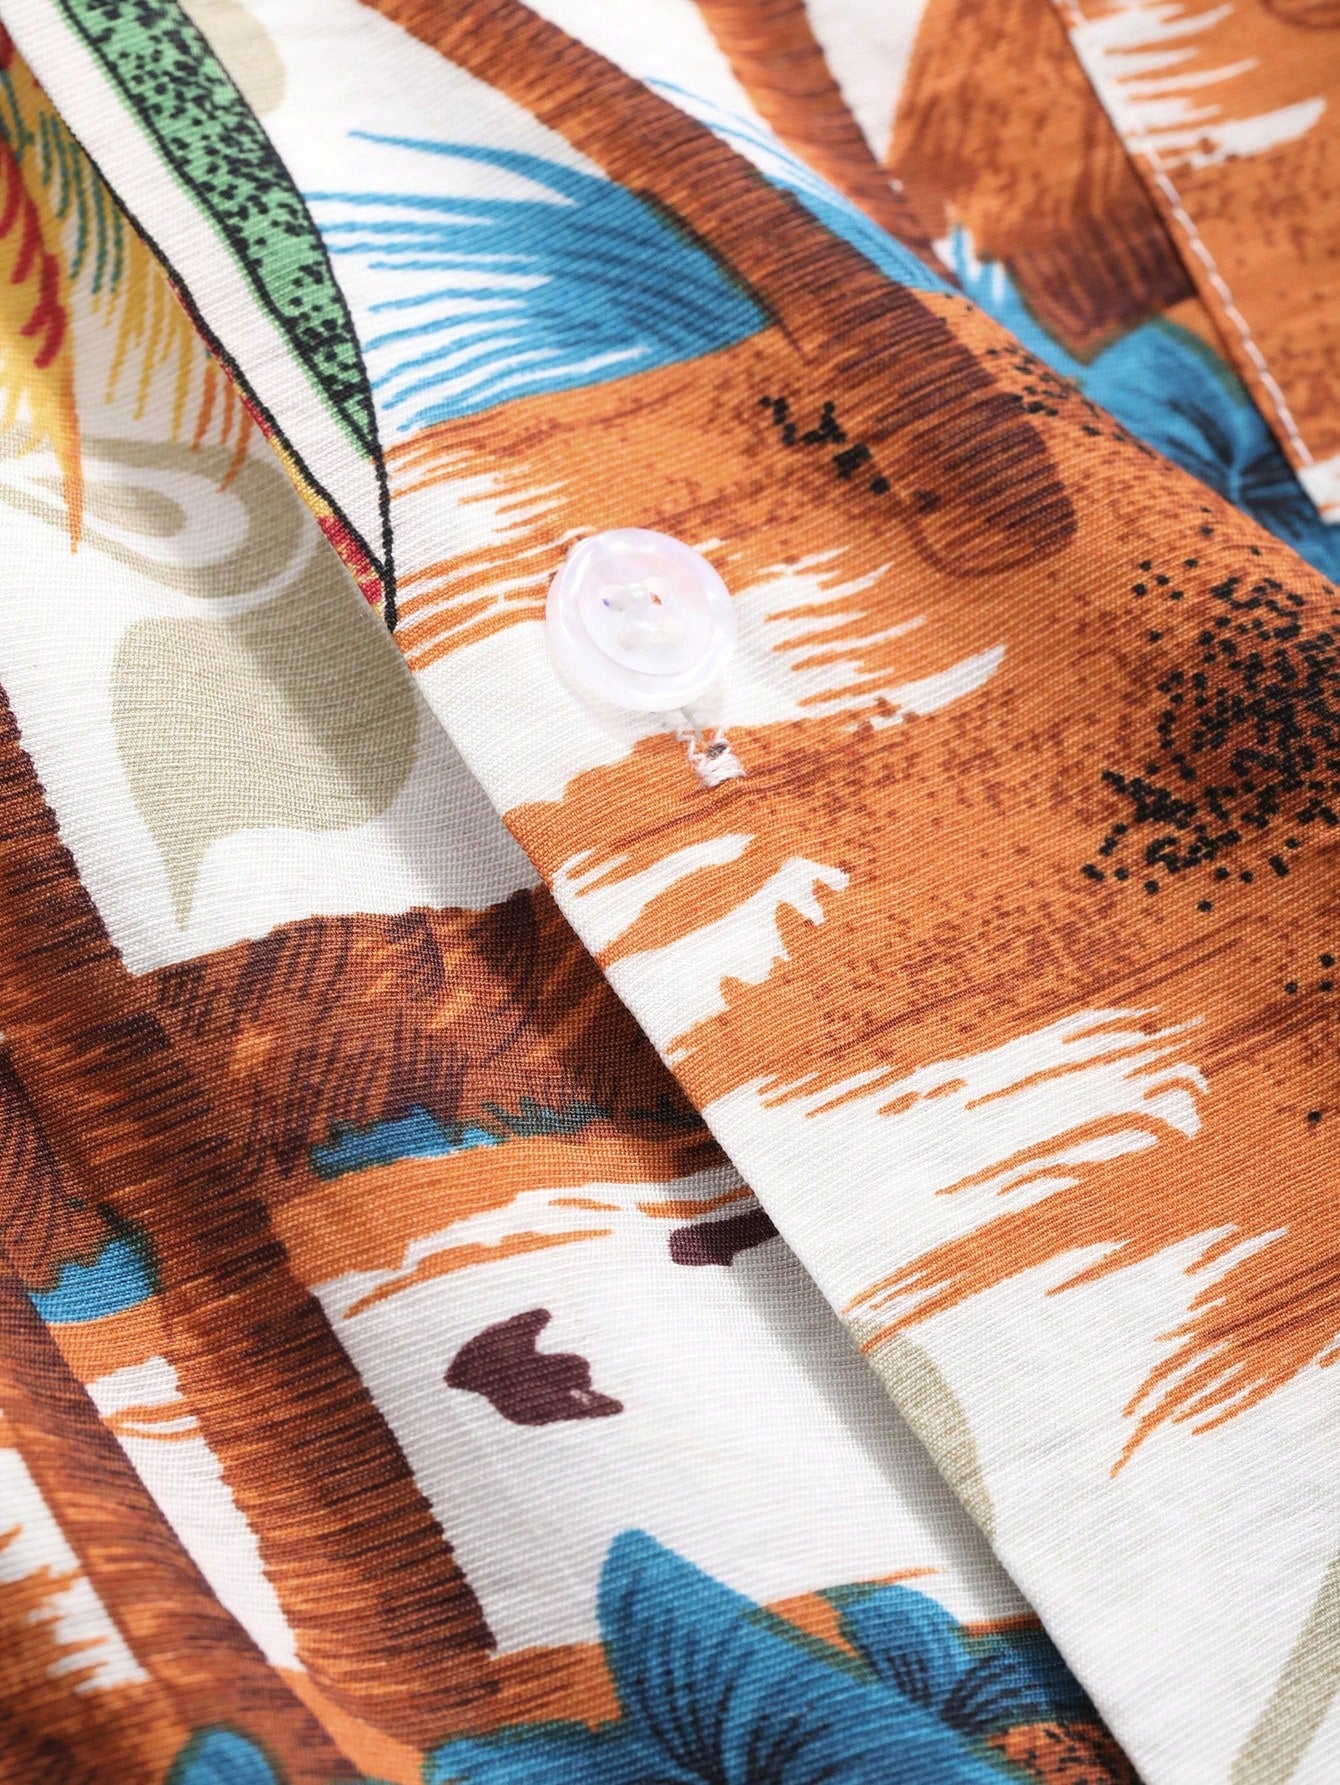 Men's Palm Tree Print Summer Beach Hawaiian Shirt